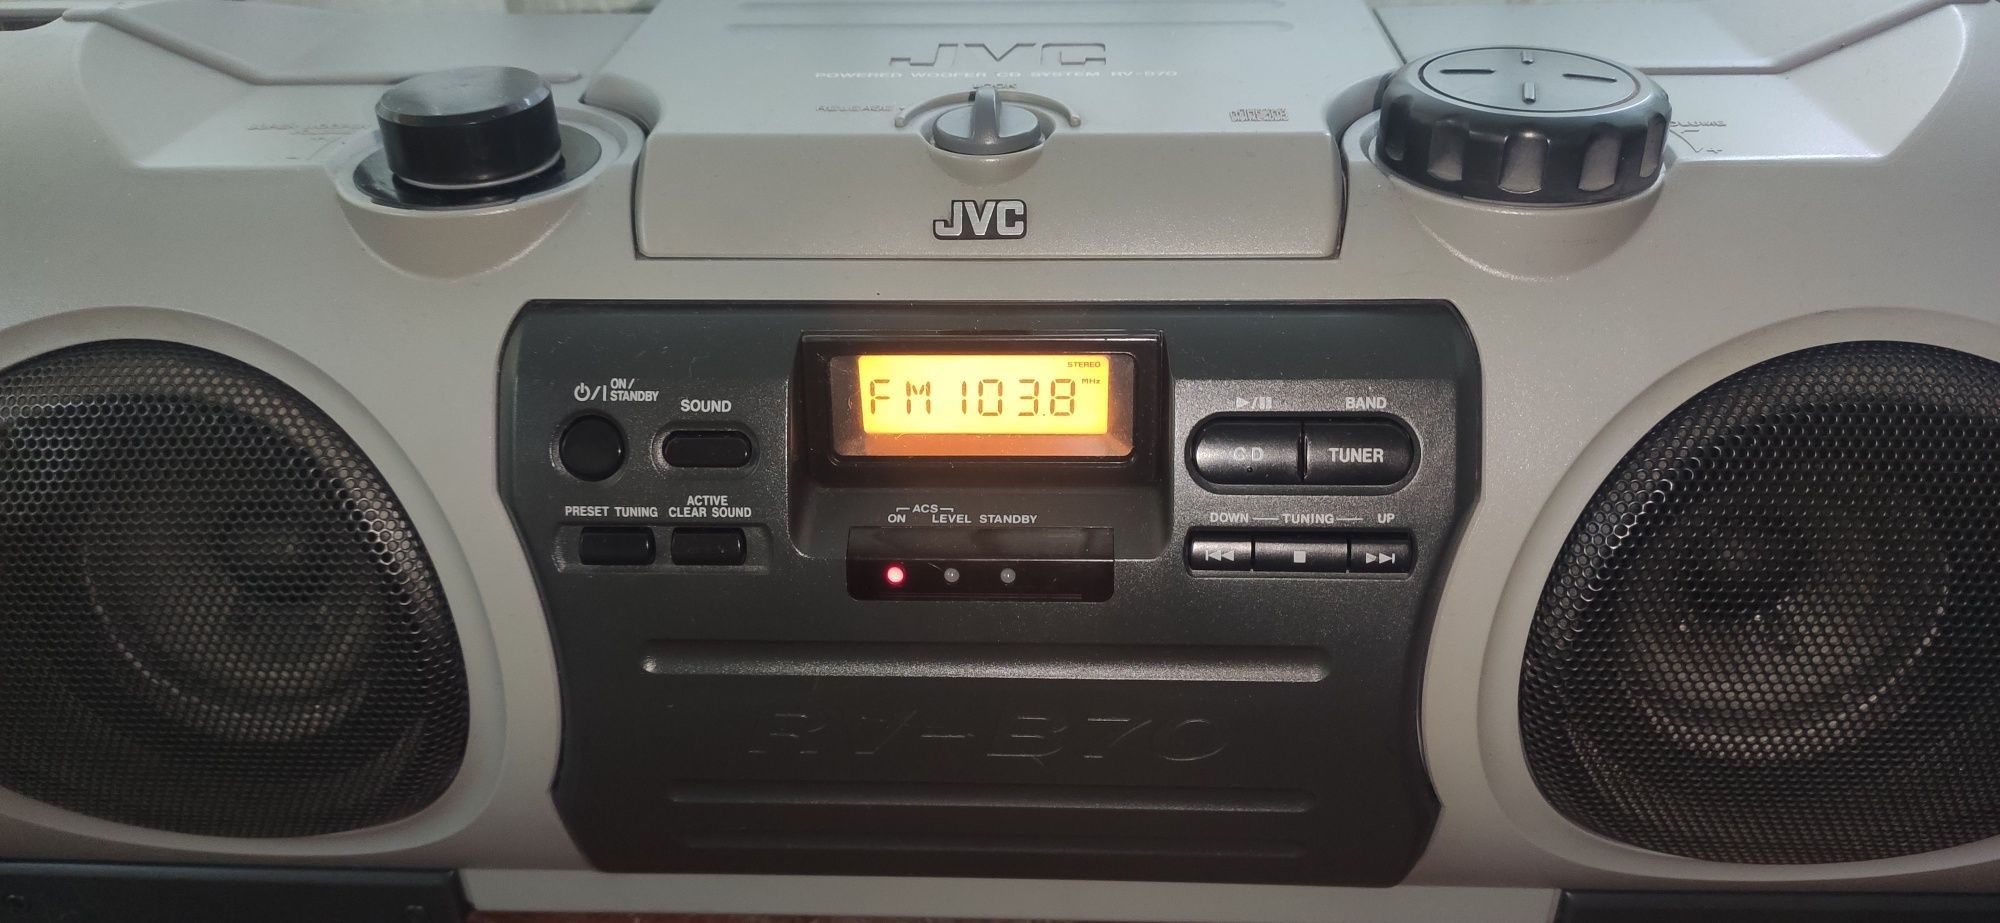 Radio Cd JVC RV-B70 GY Boombox Boomblaster